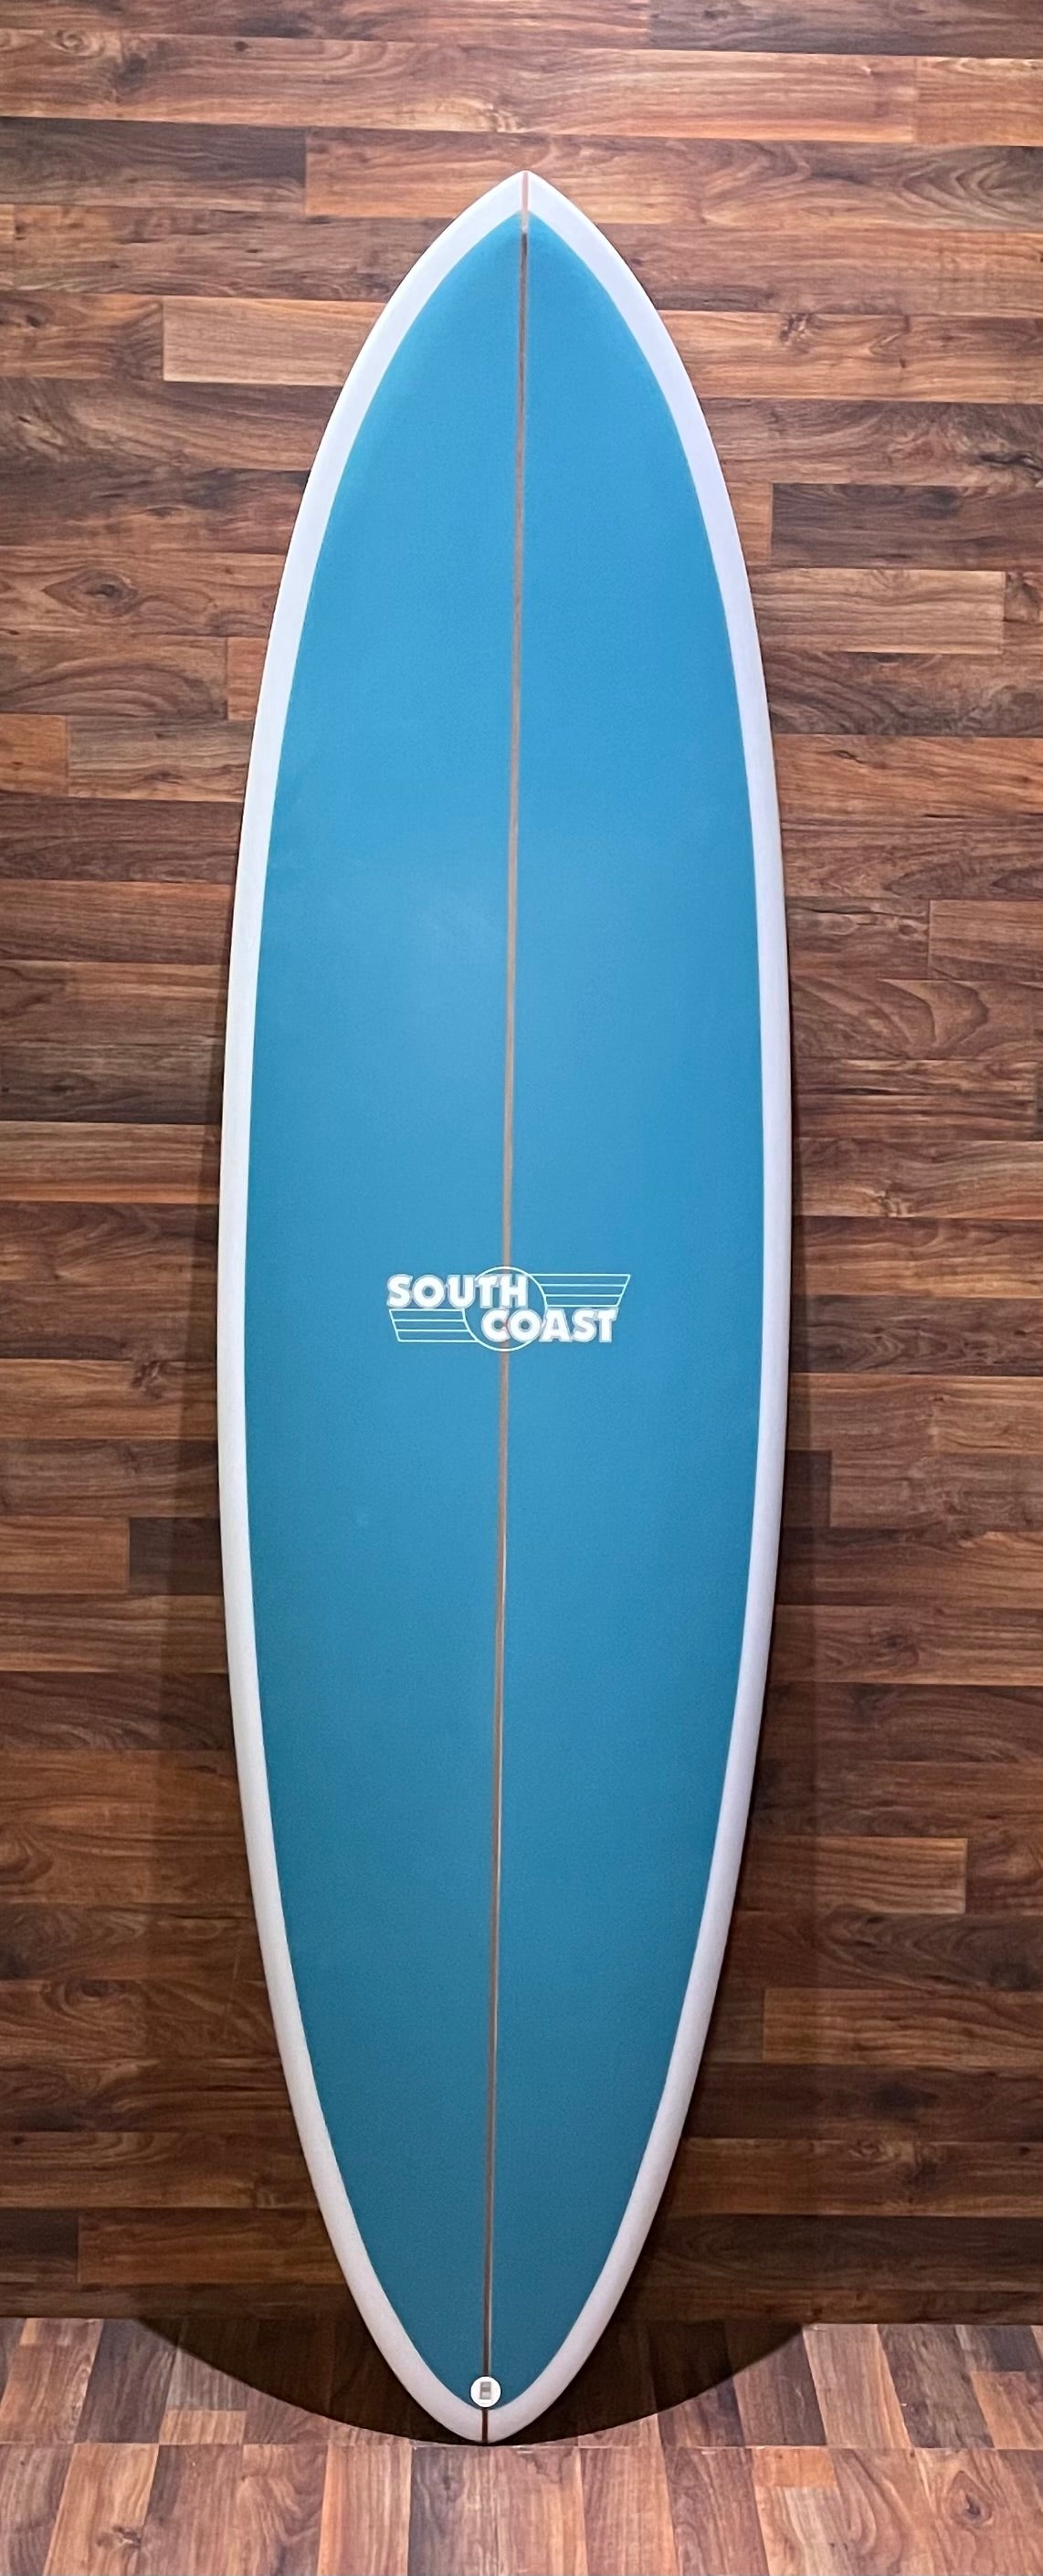 SOUTH COAST BACHELOR SURFBOARD 6'10"